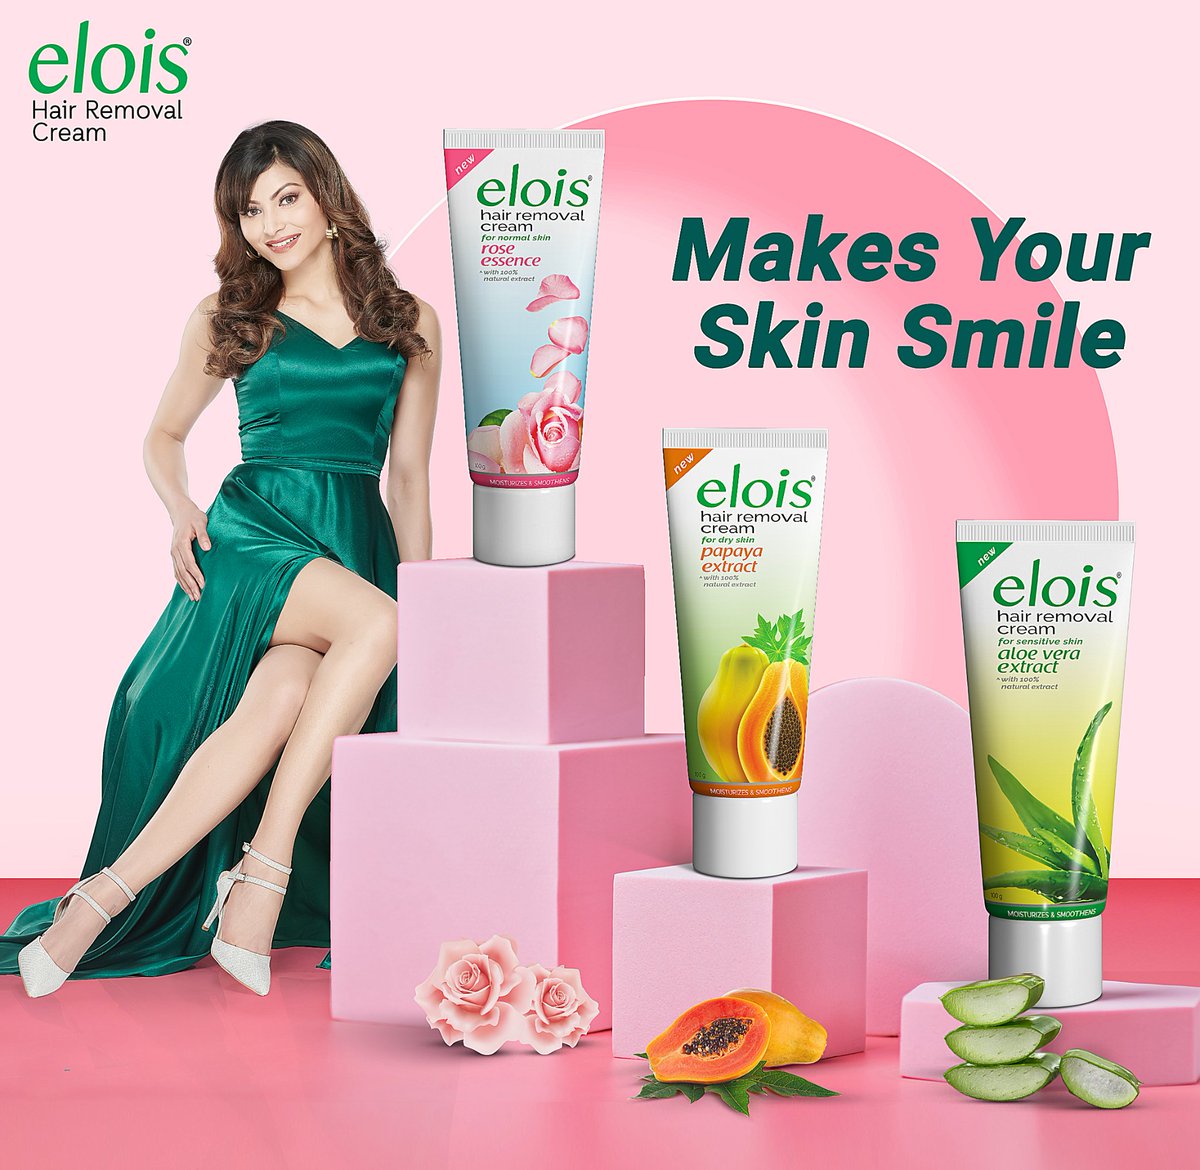 Elois Hair Removal Cream is the only quick solution to glowing skin🌷🍑🍃

#elois #eloishairremovalcream #eloissmoothsquad #eloisbrand #eloissmoothskin #skincare #hairremoval #shinyskin #beautifulskin #naturalextract #UrvashiRautela #Velnik #VelnikIndia